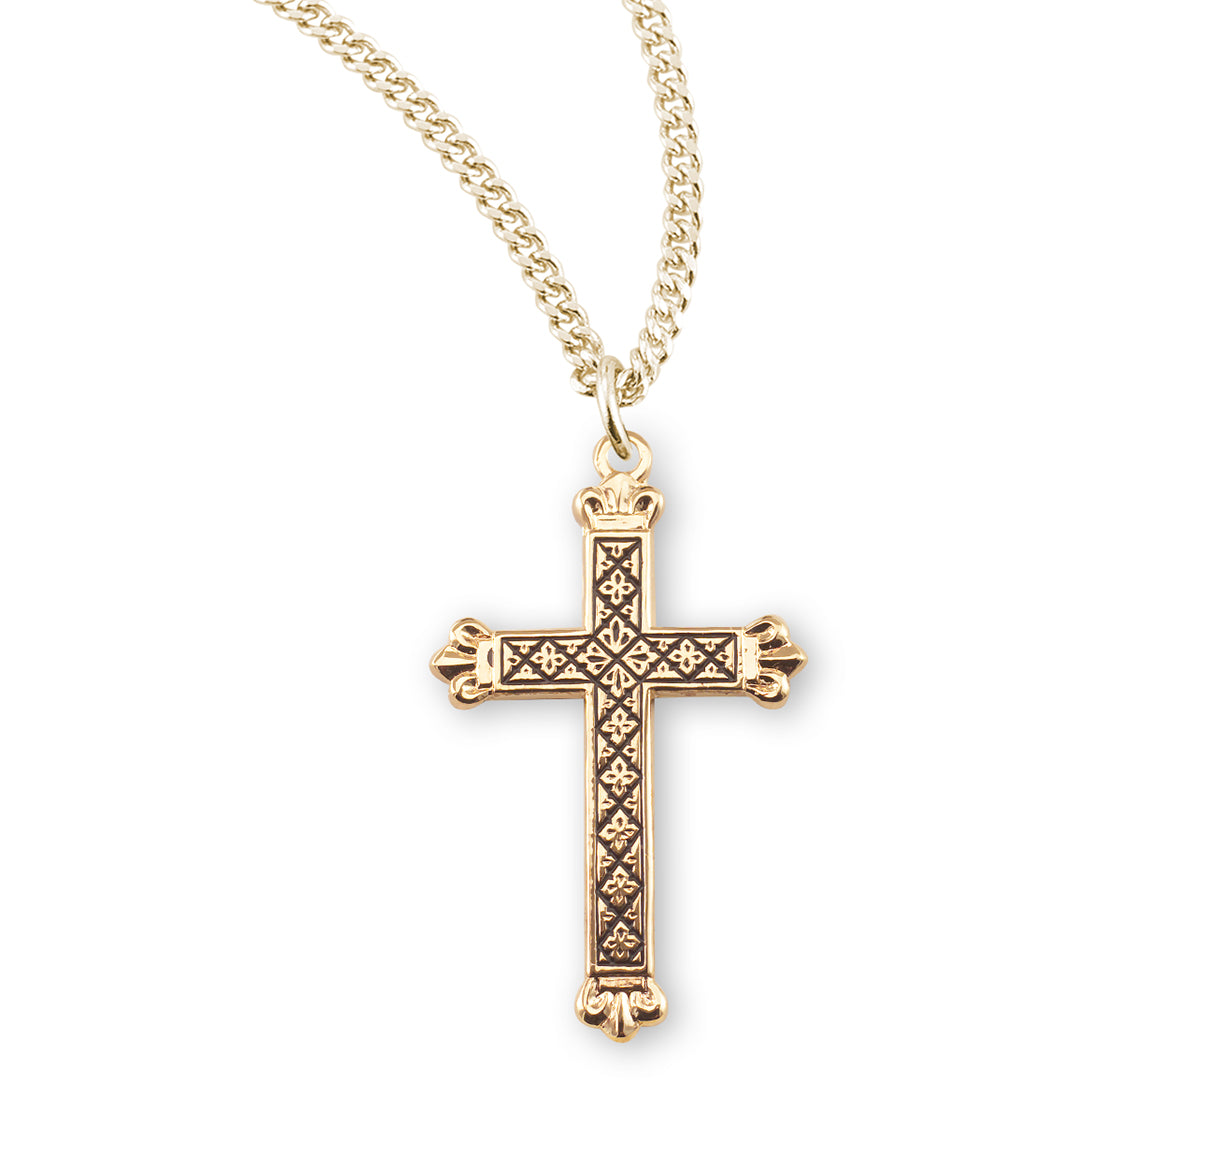 Gold Cross Necklace with Black Enamel Design (1.2